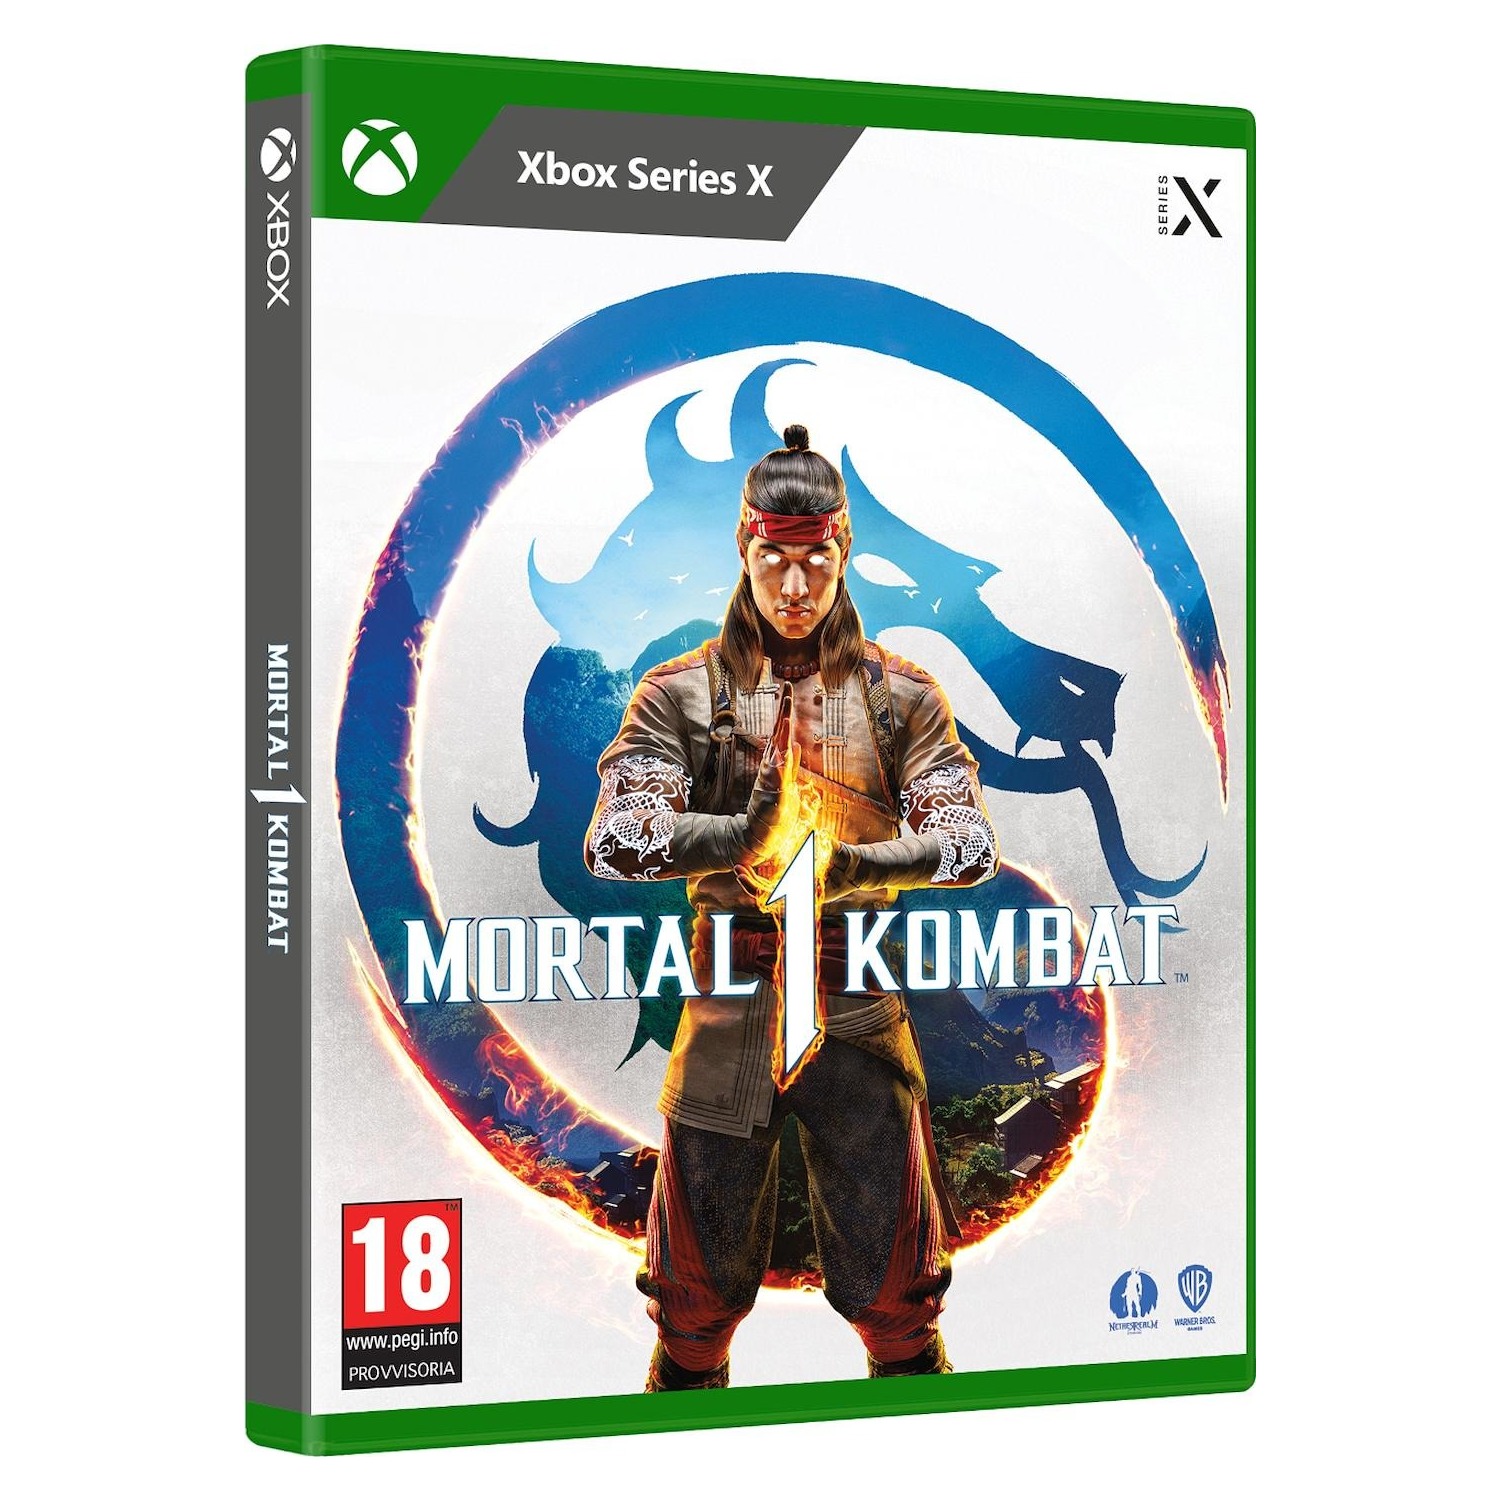 Gioco XBOX Series X Mortal Kombat 1 - DIMOStore